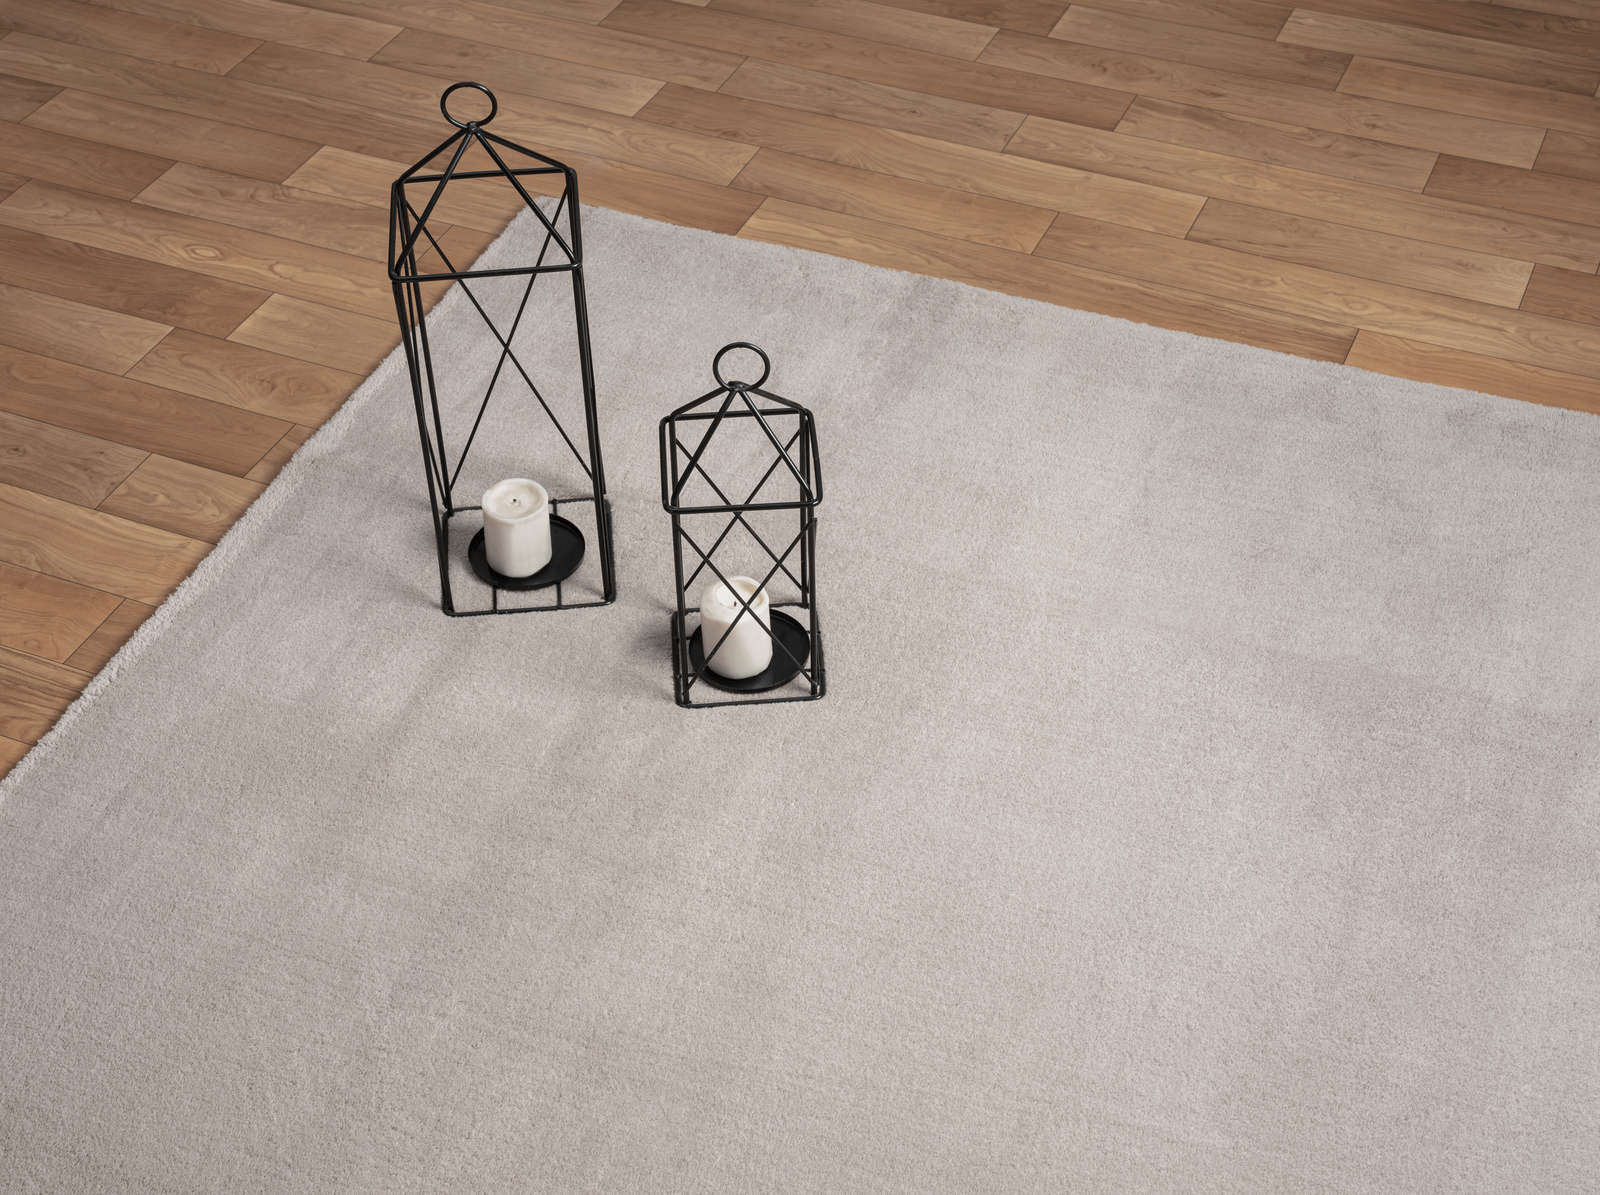             Fashionable high pile carpet in sand - 110 x 60 cm
        